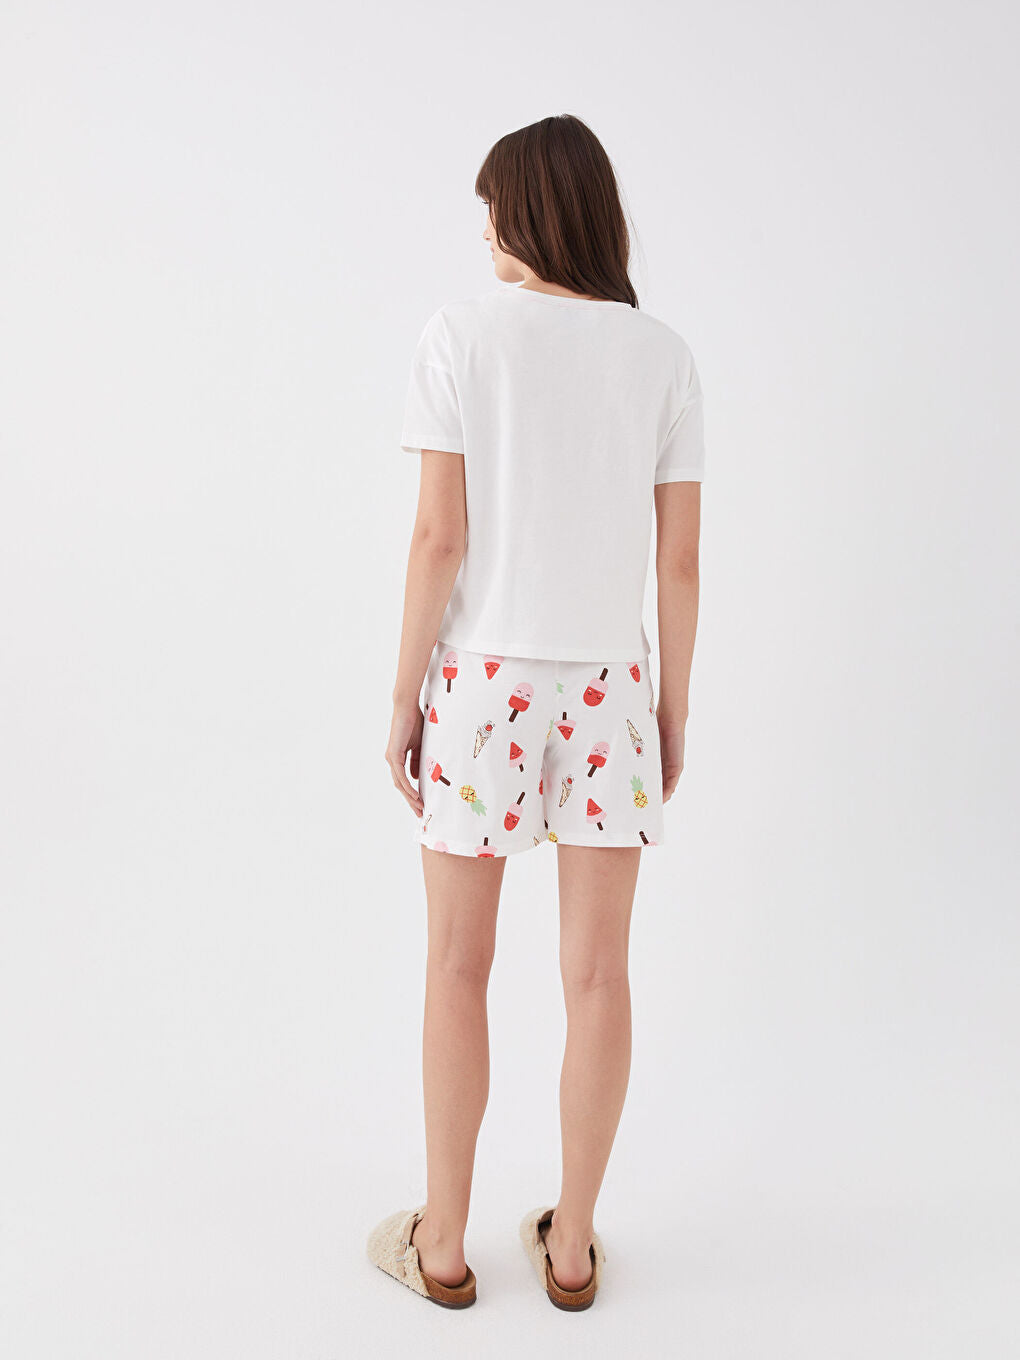 Crew Neck Printed Short Sleeve Women Shorts Pajamas Set